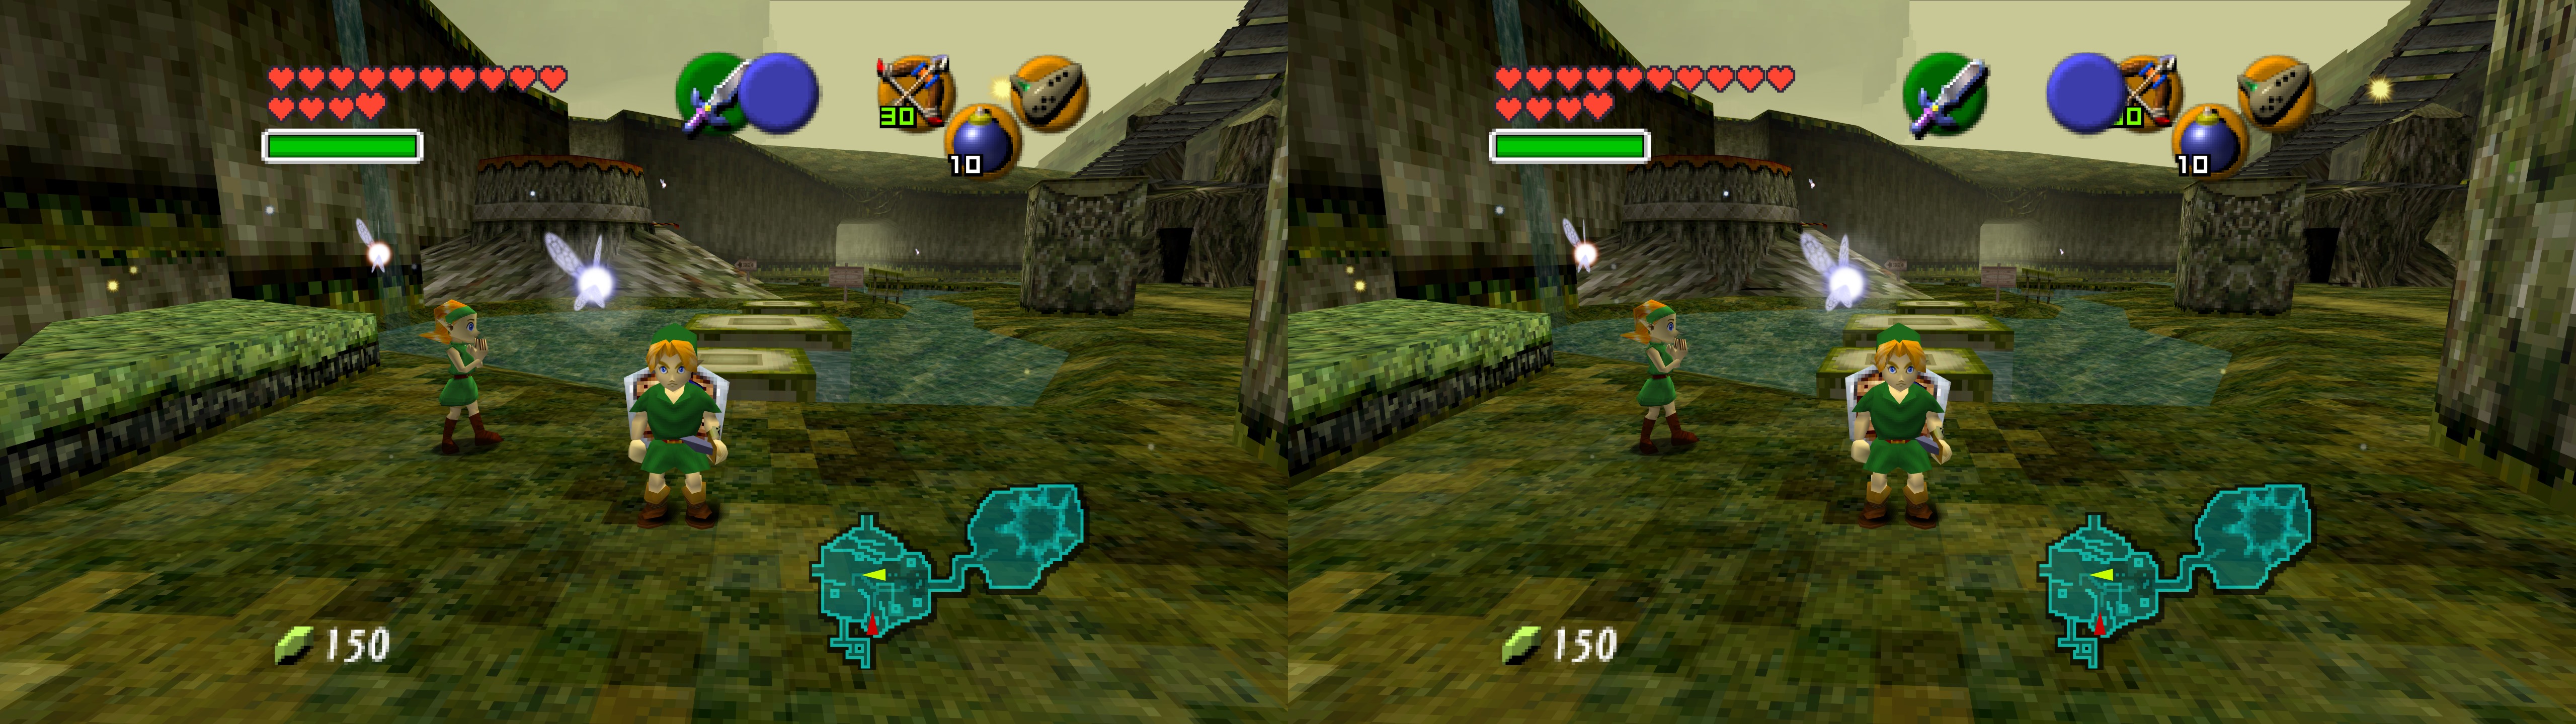 Helix Mod: The Legend of Zelda: Ocarina of Time [DX11]